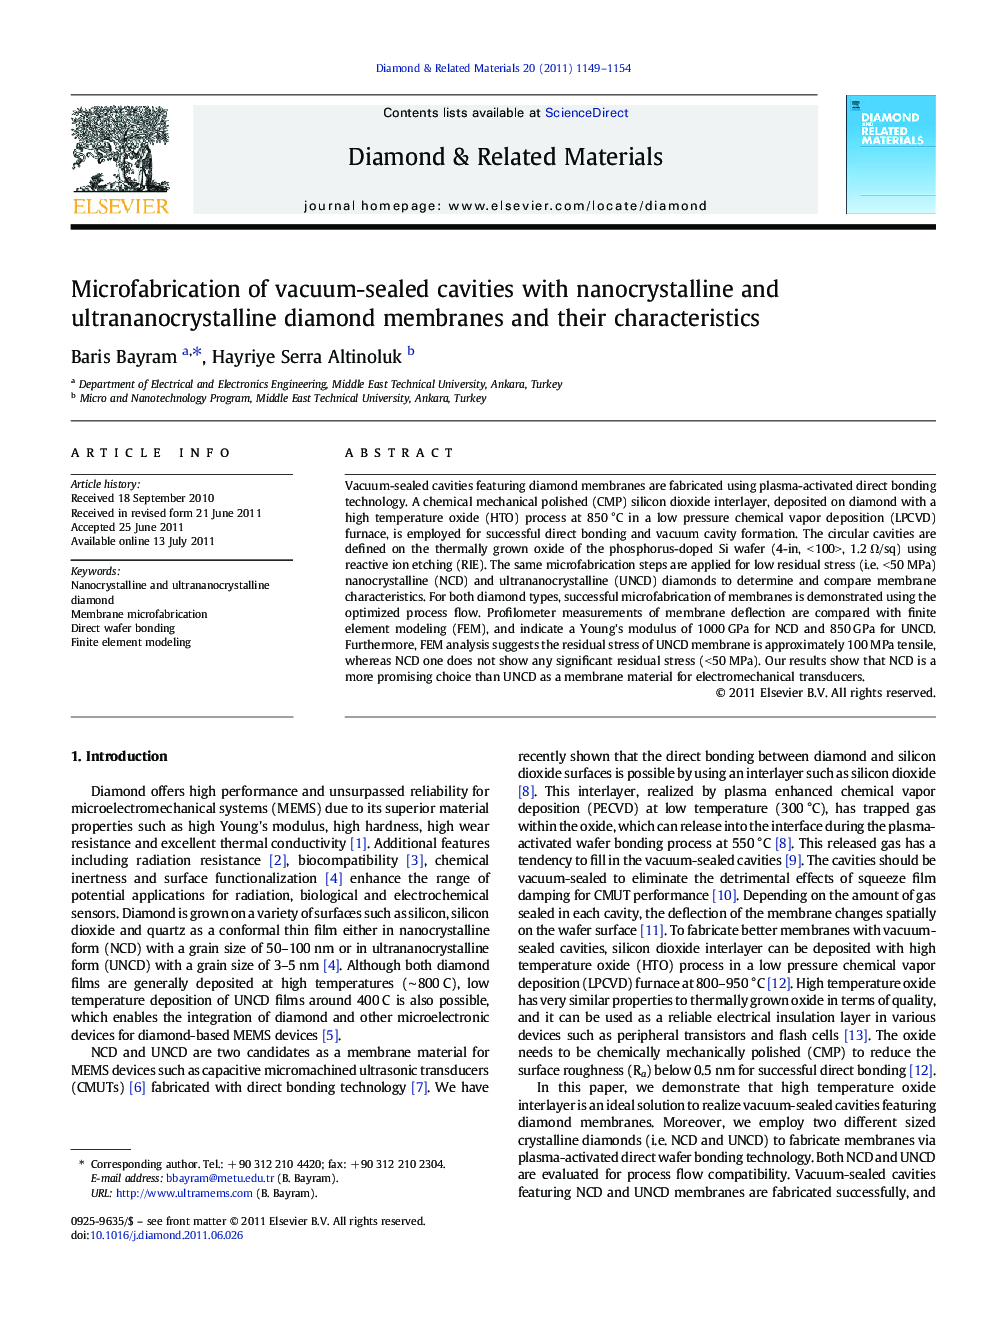 Microfabrication of vacuum-sealed cavities with nanocrystalline and ultrananocrystalline diamond membranes and their characteristics